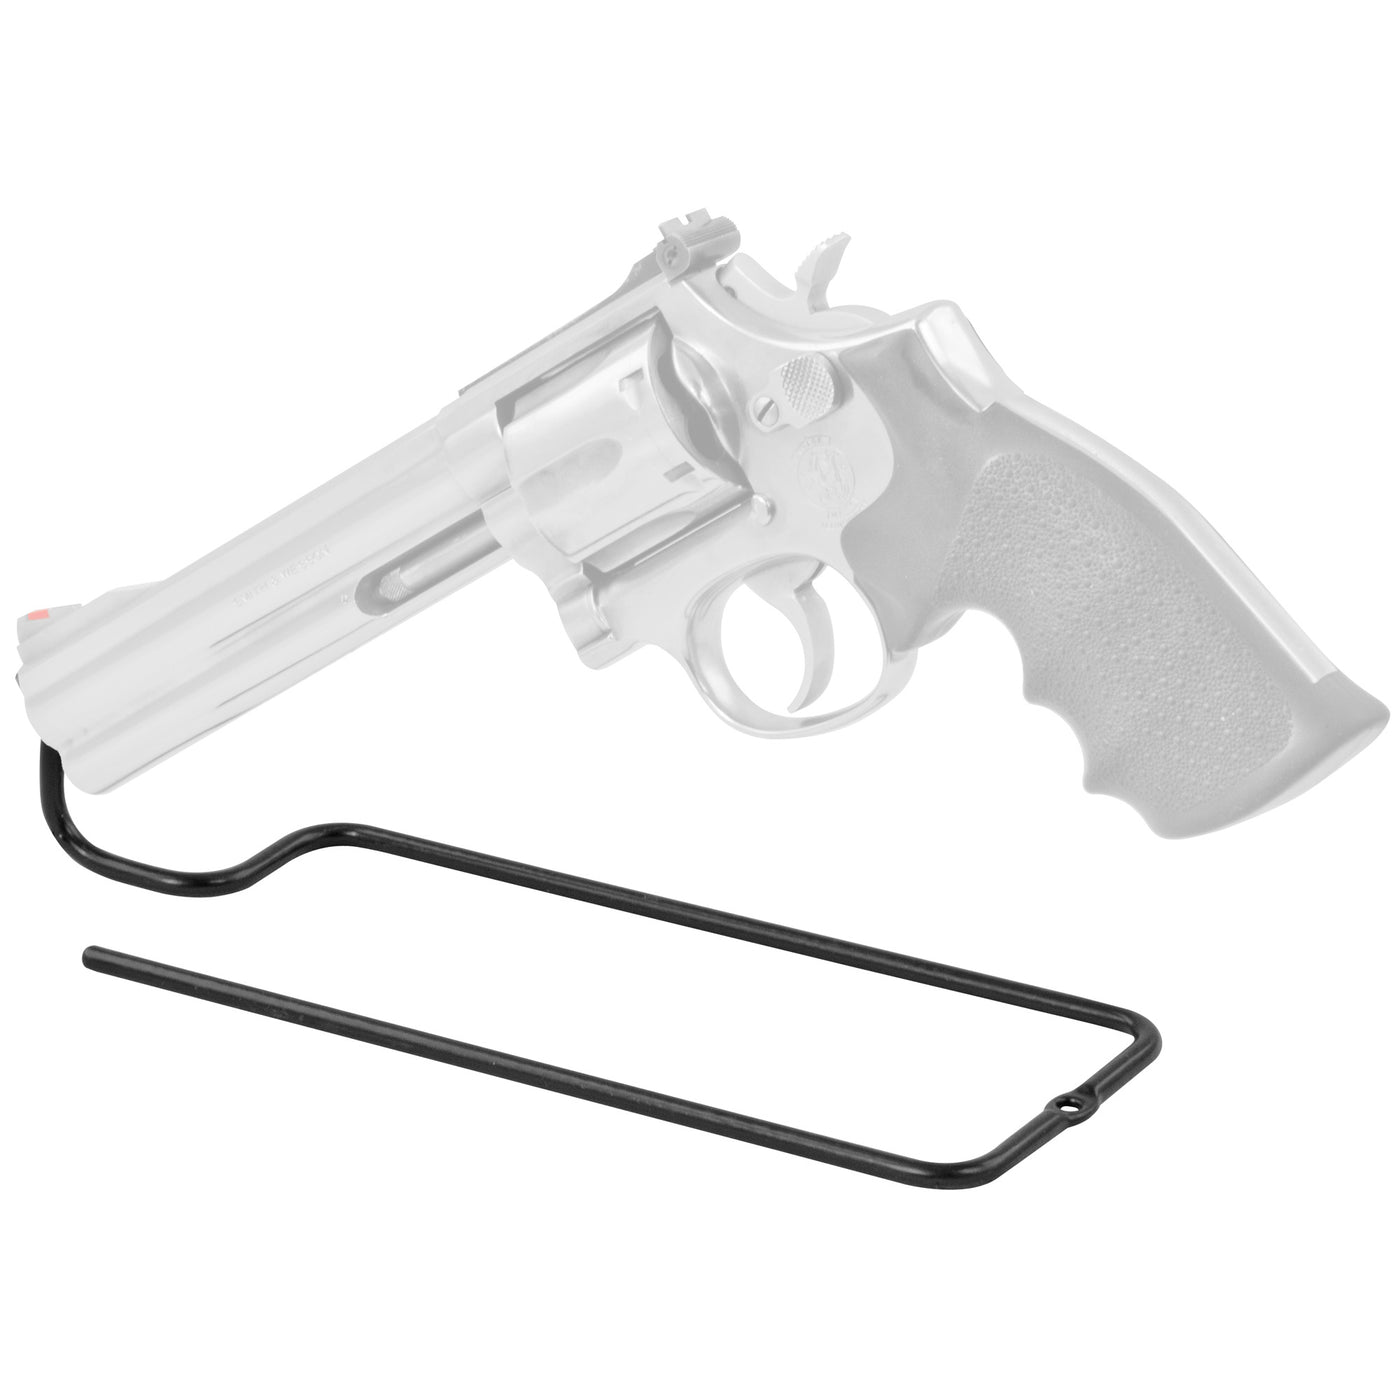 Lockdown Handgun Rack 1 Gun - 3 Pack